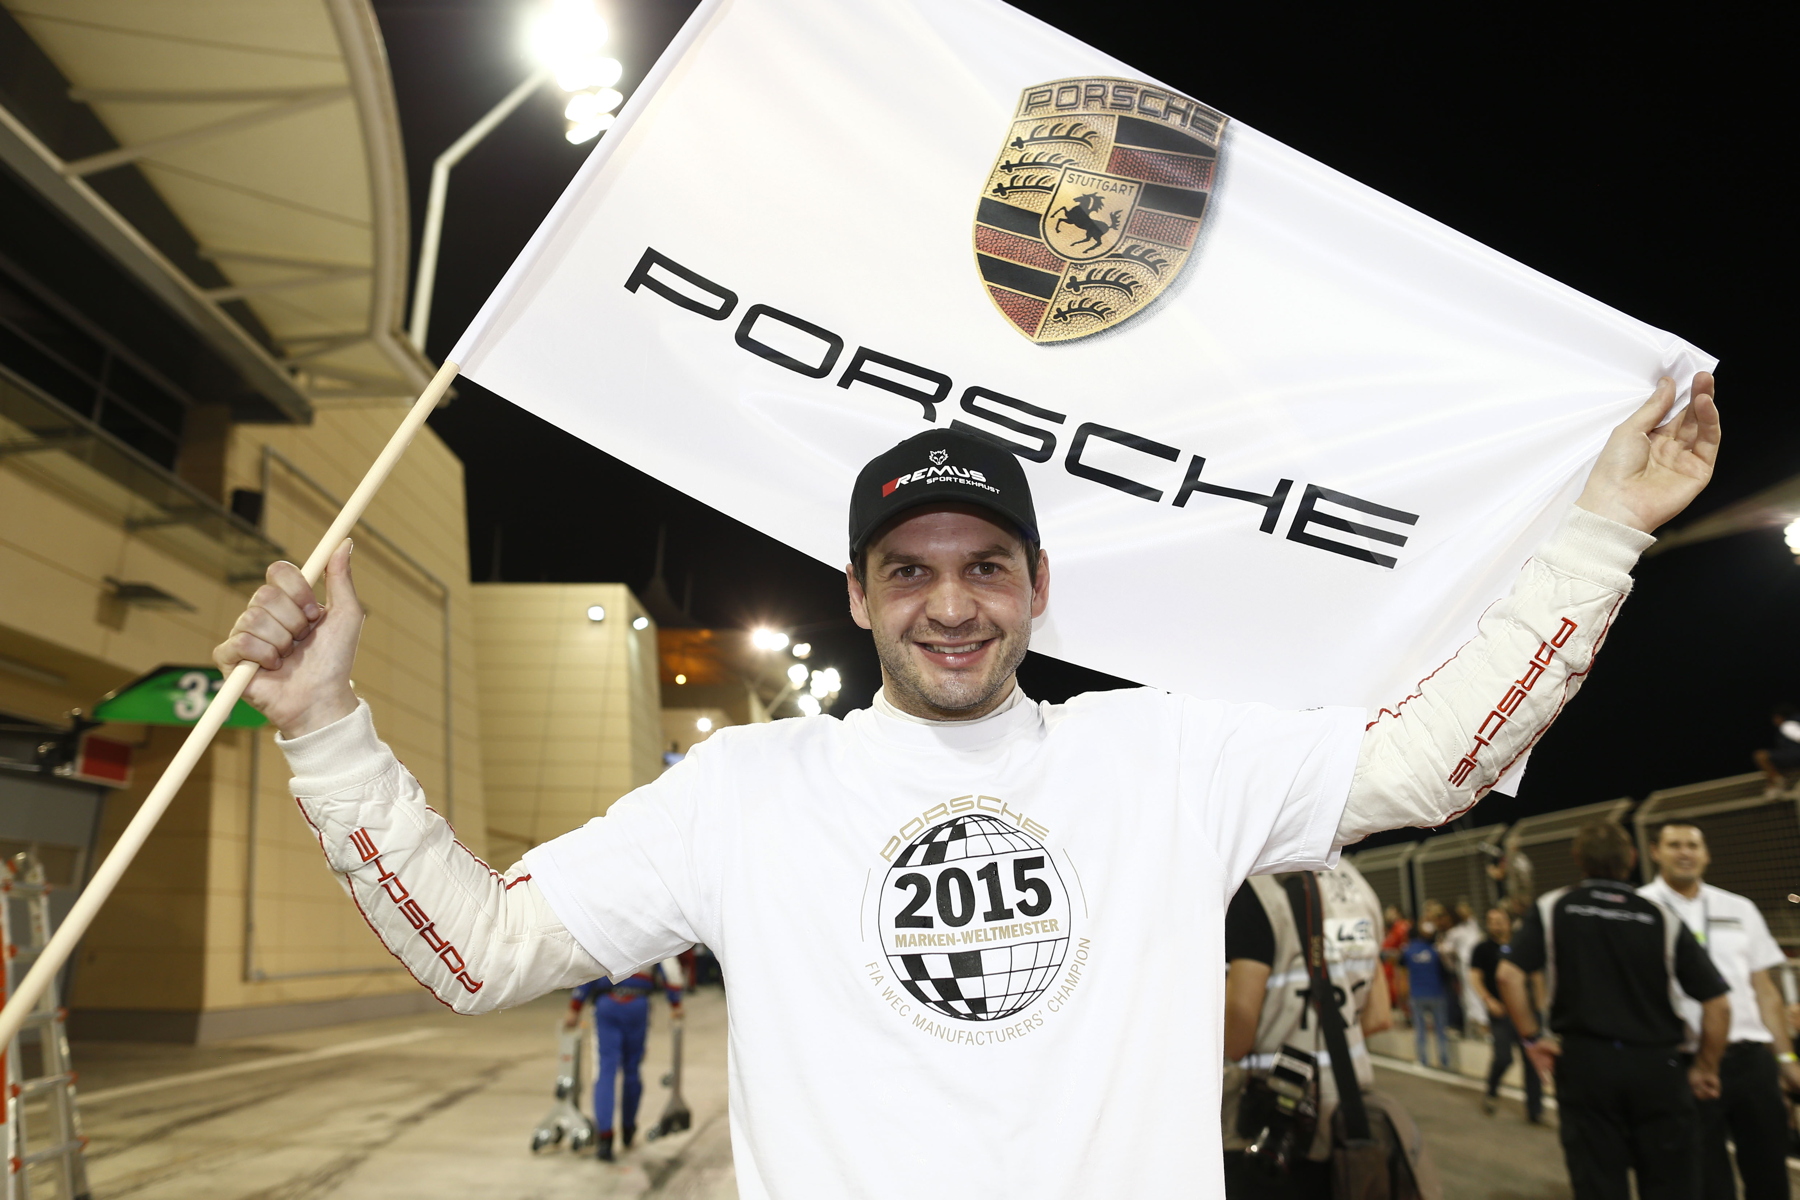 The 2015 FIA World Endurance Championship is Richard Lietz's biggest success to date.